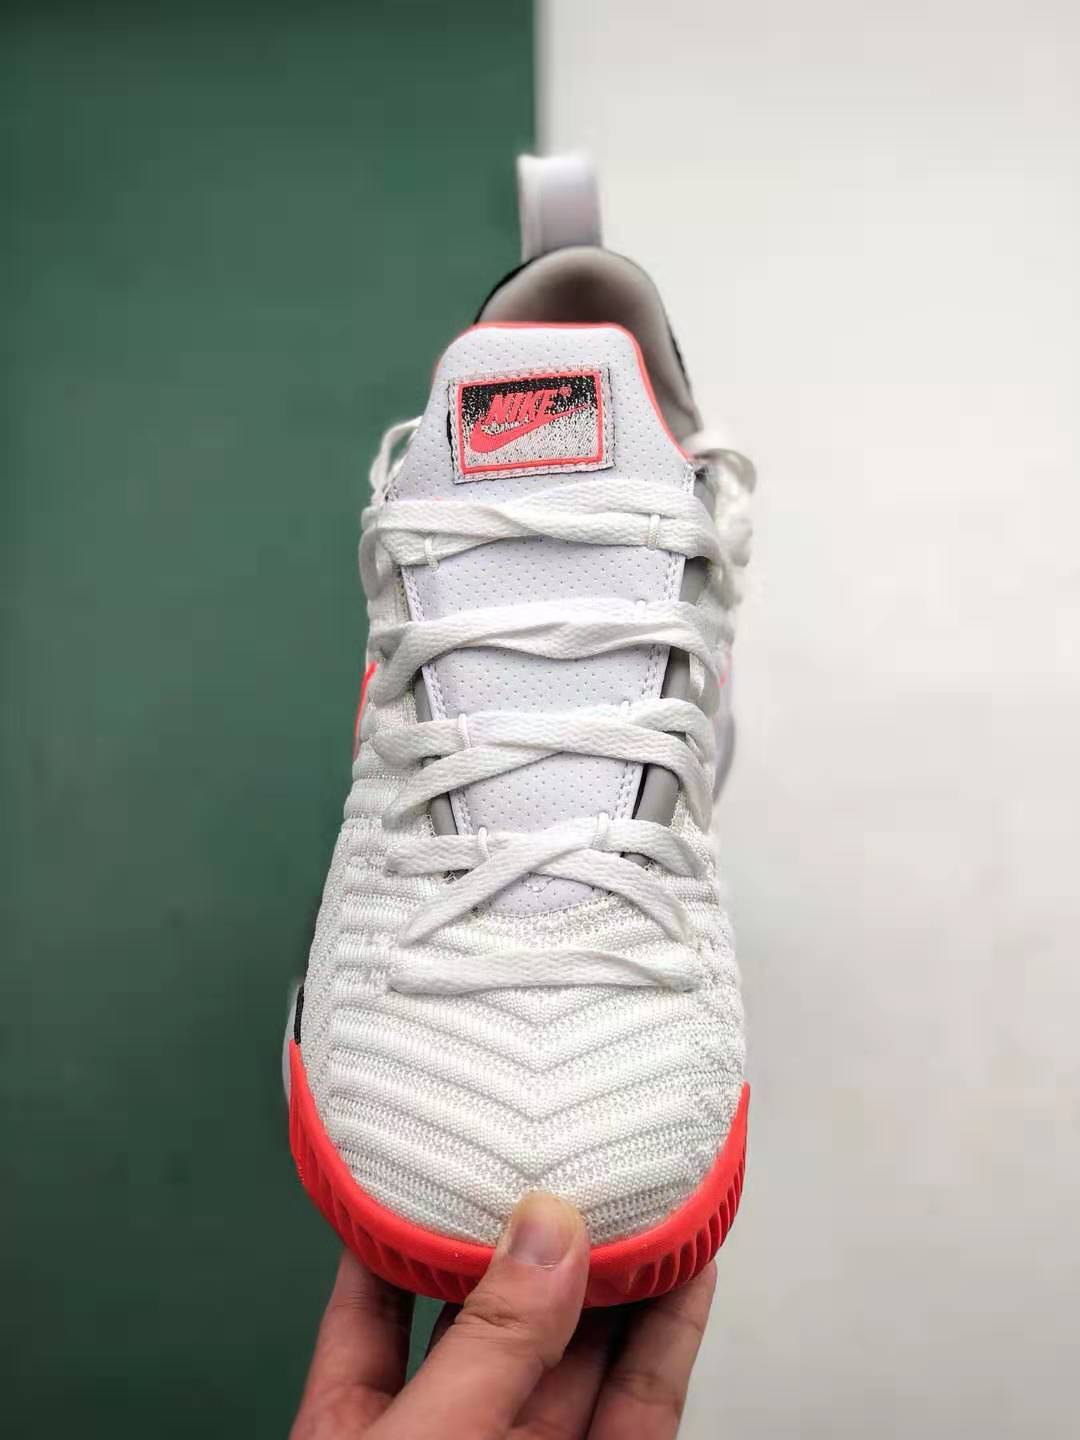 Nike LeBron 16 'Air Tech Challenge Hot Lava White' CI1521-100 - Stylish & Comfortable Basketball Sneakers